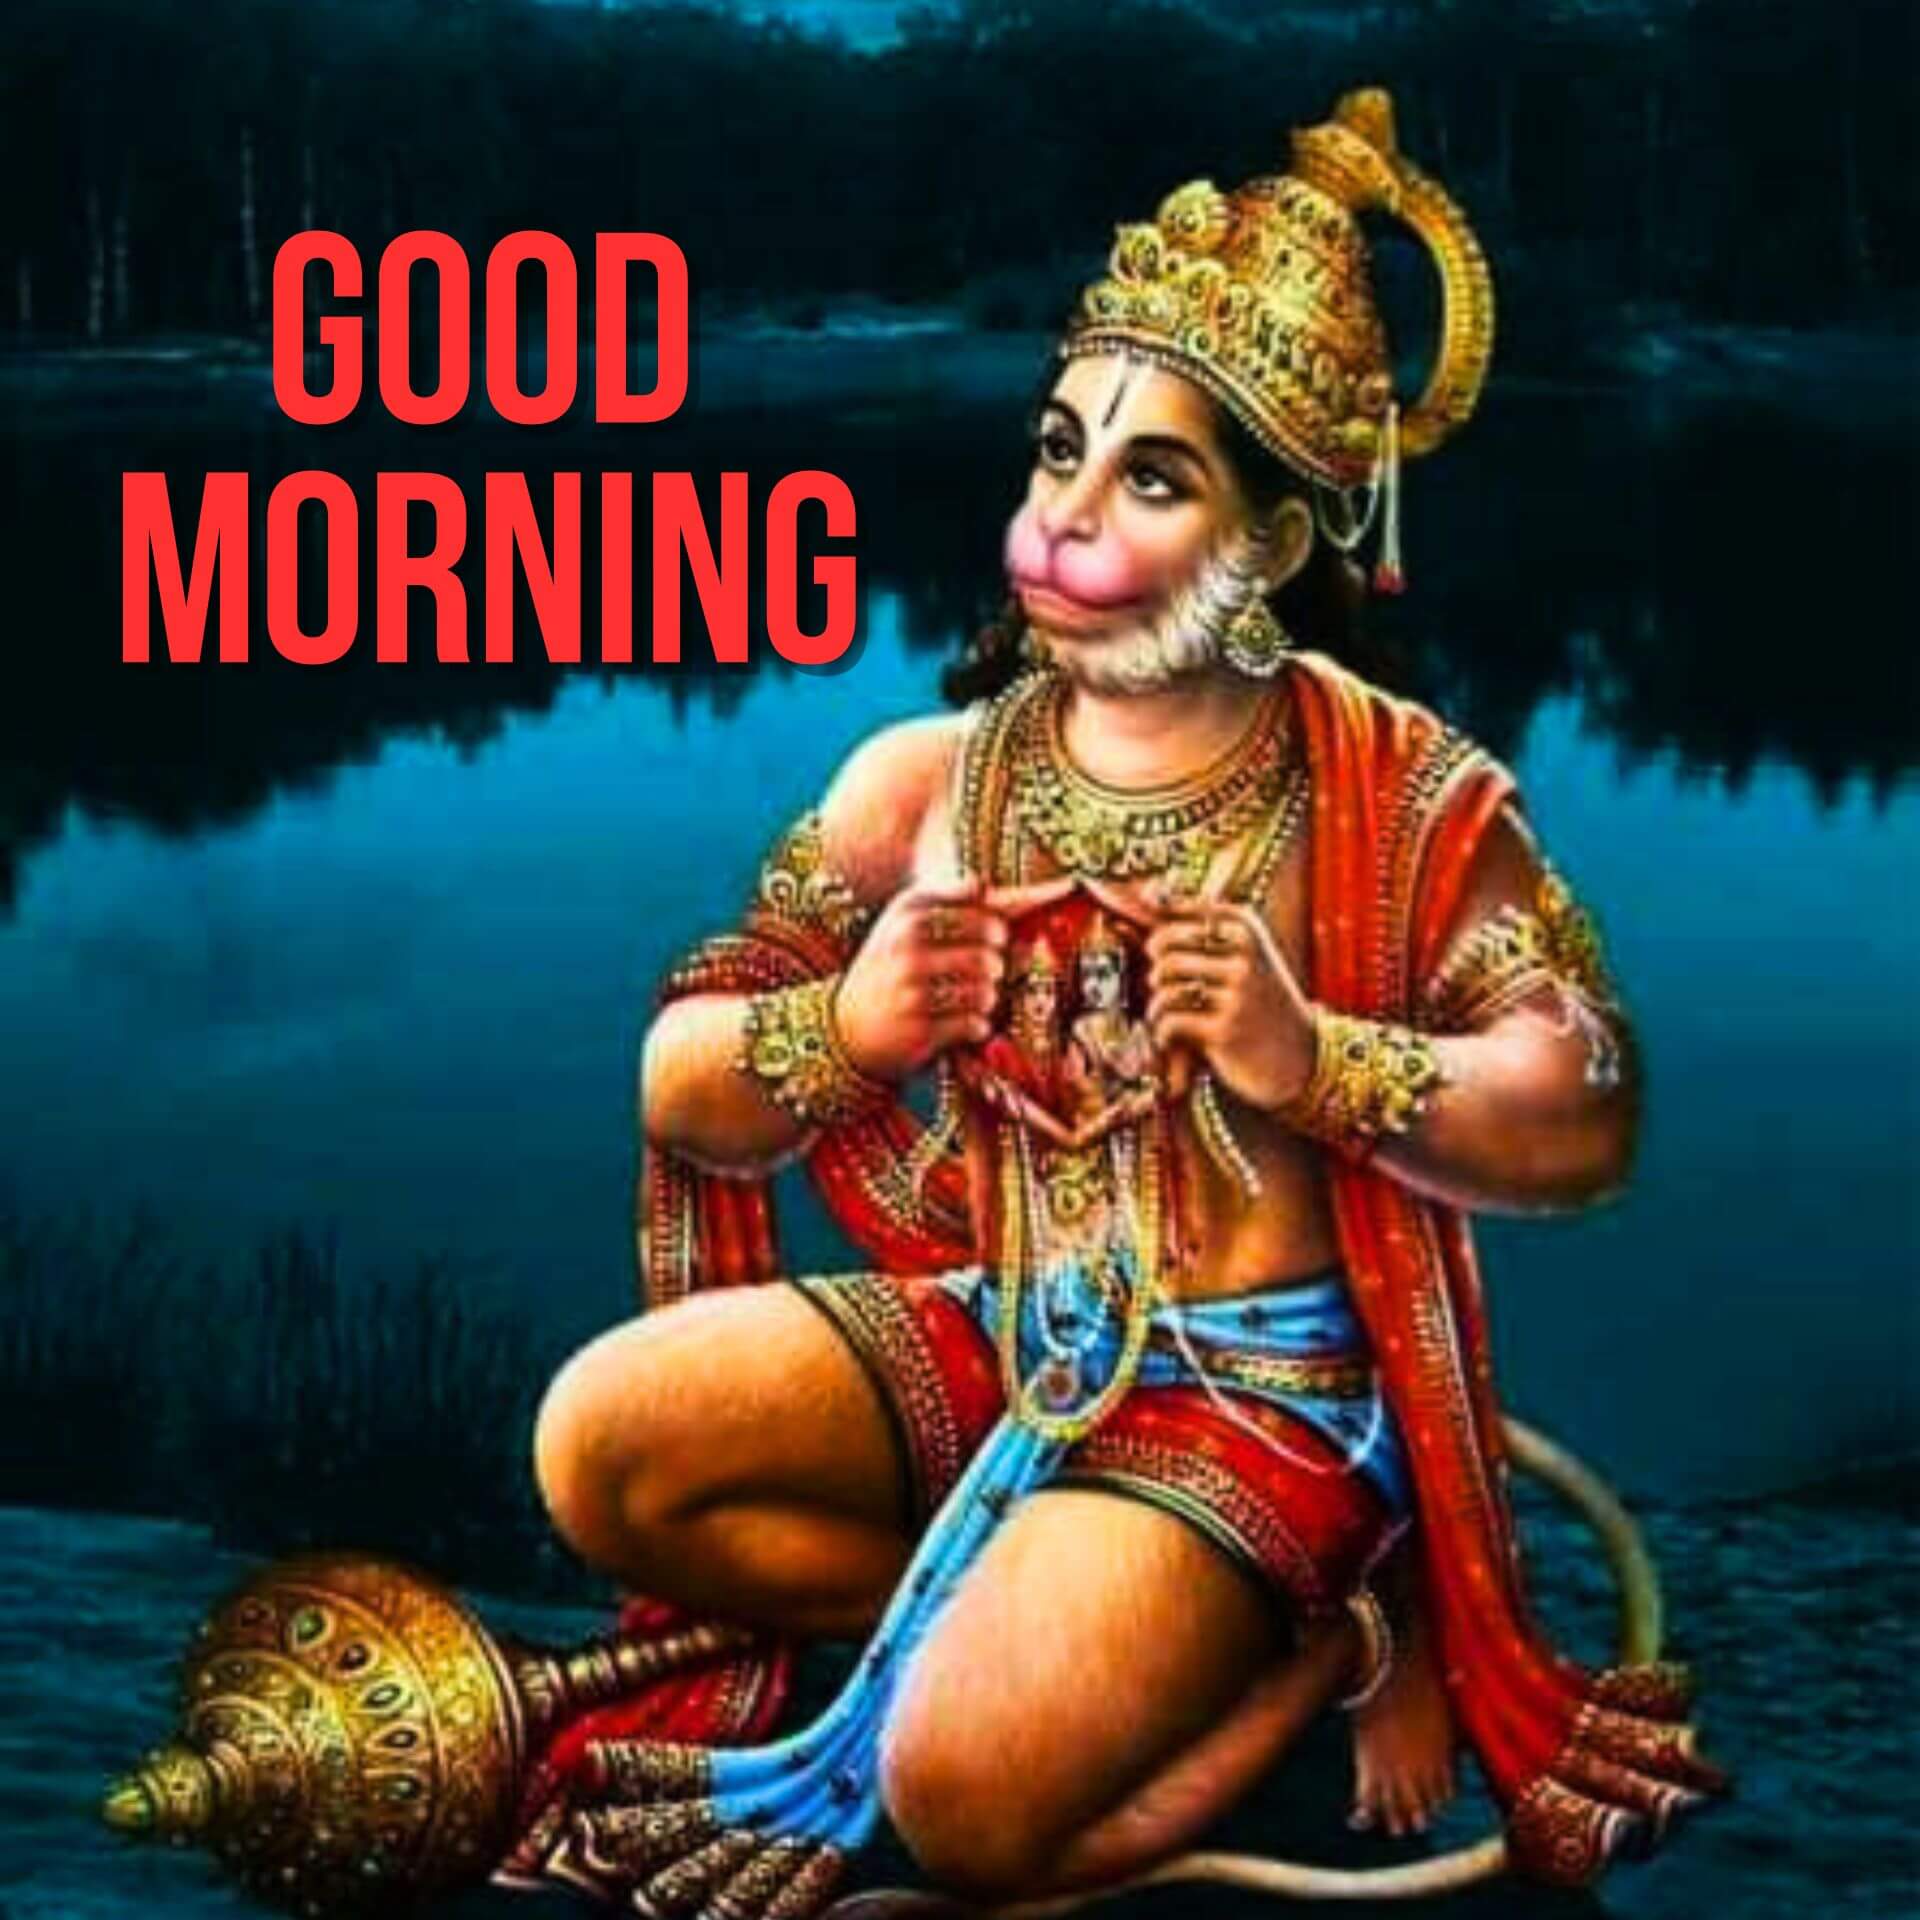 hanuman ji good morning Wallpaper Free Download 2